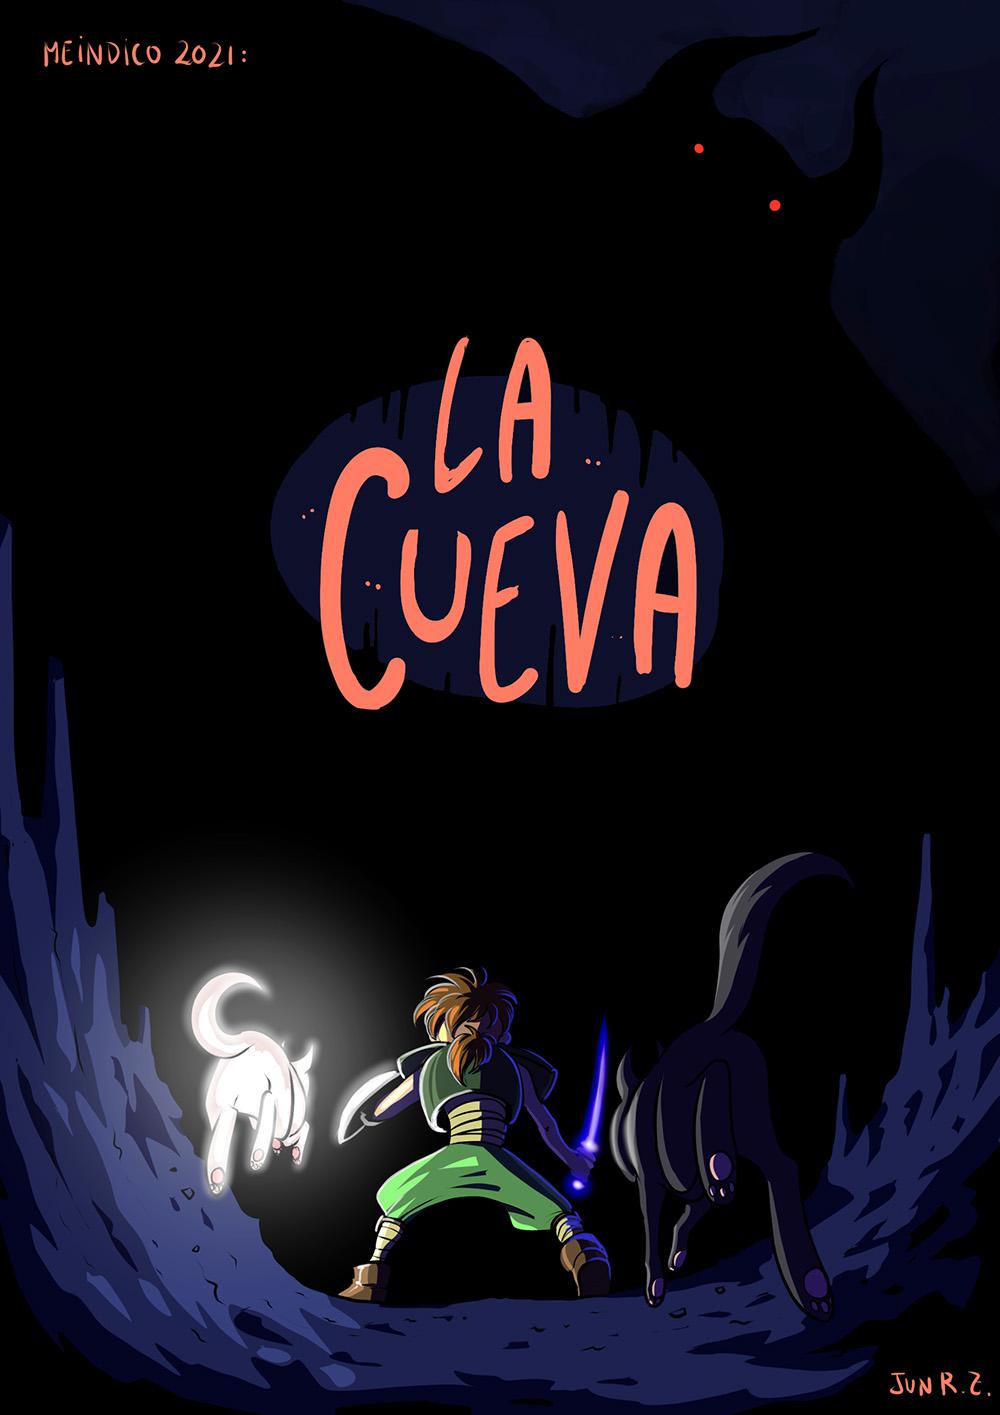 Portadilla La Cueva.jpg